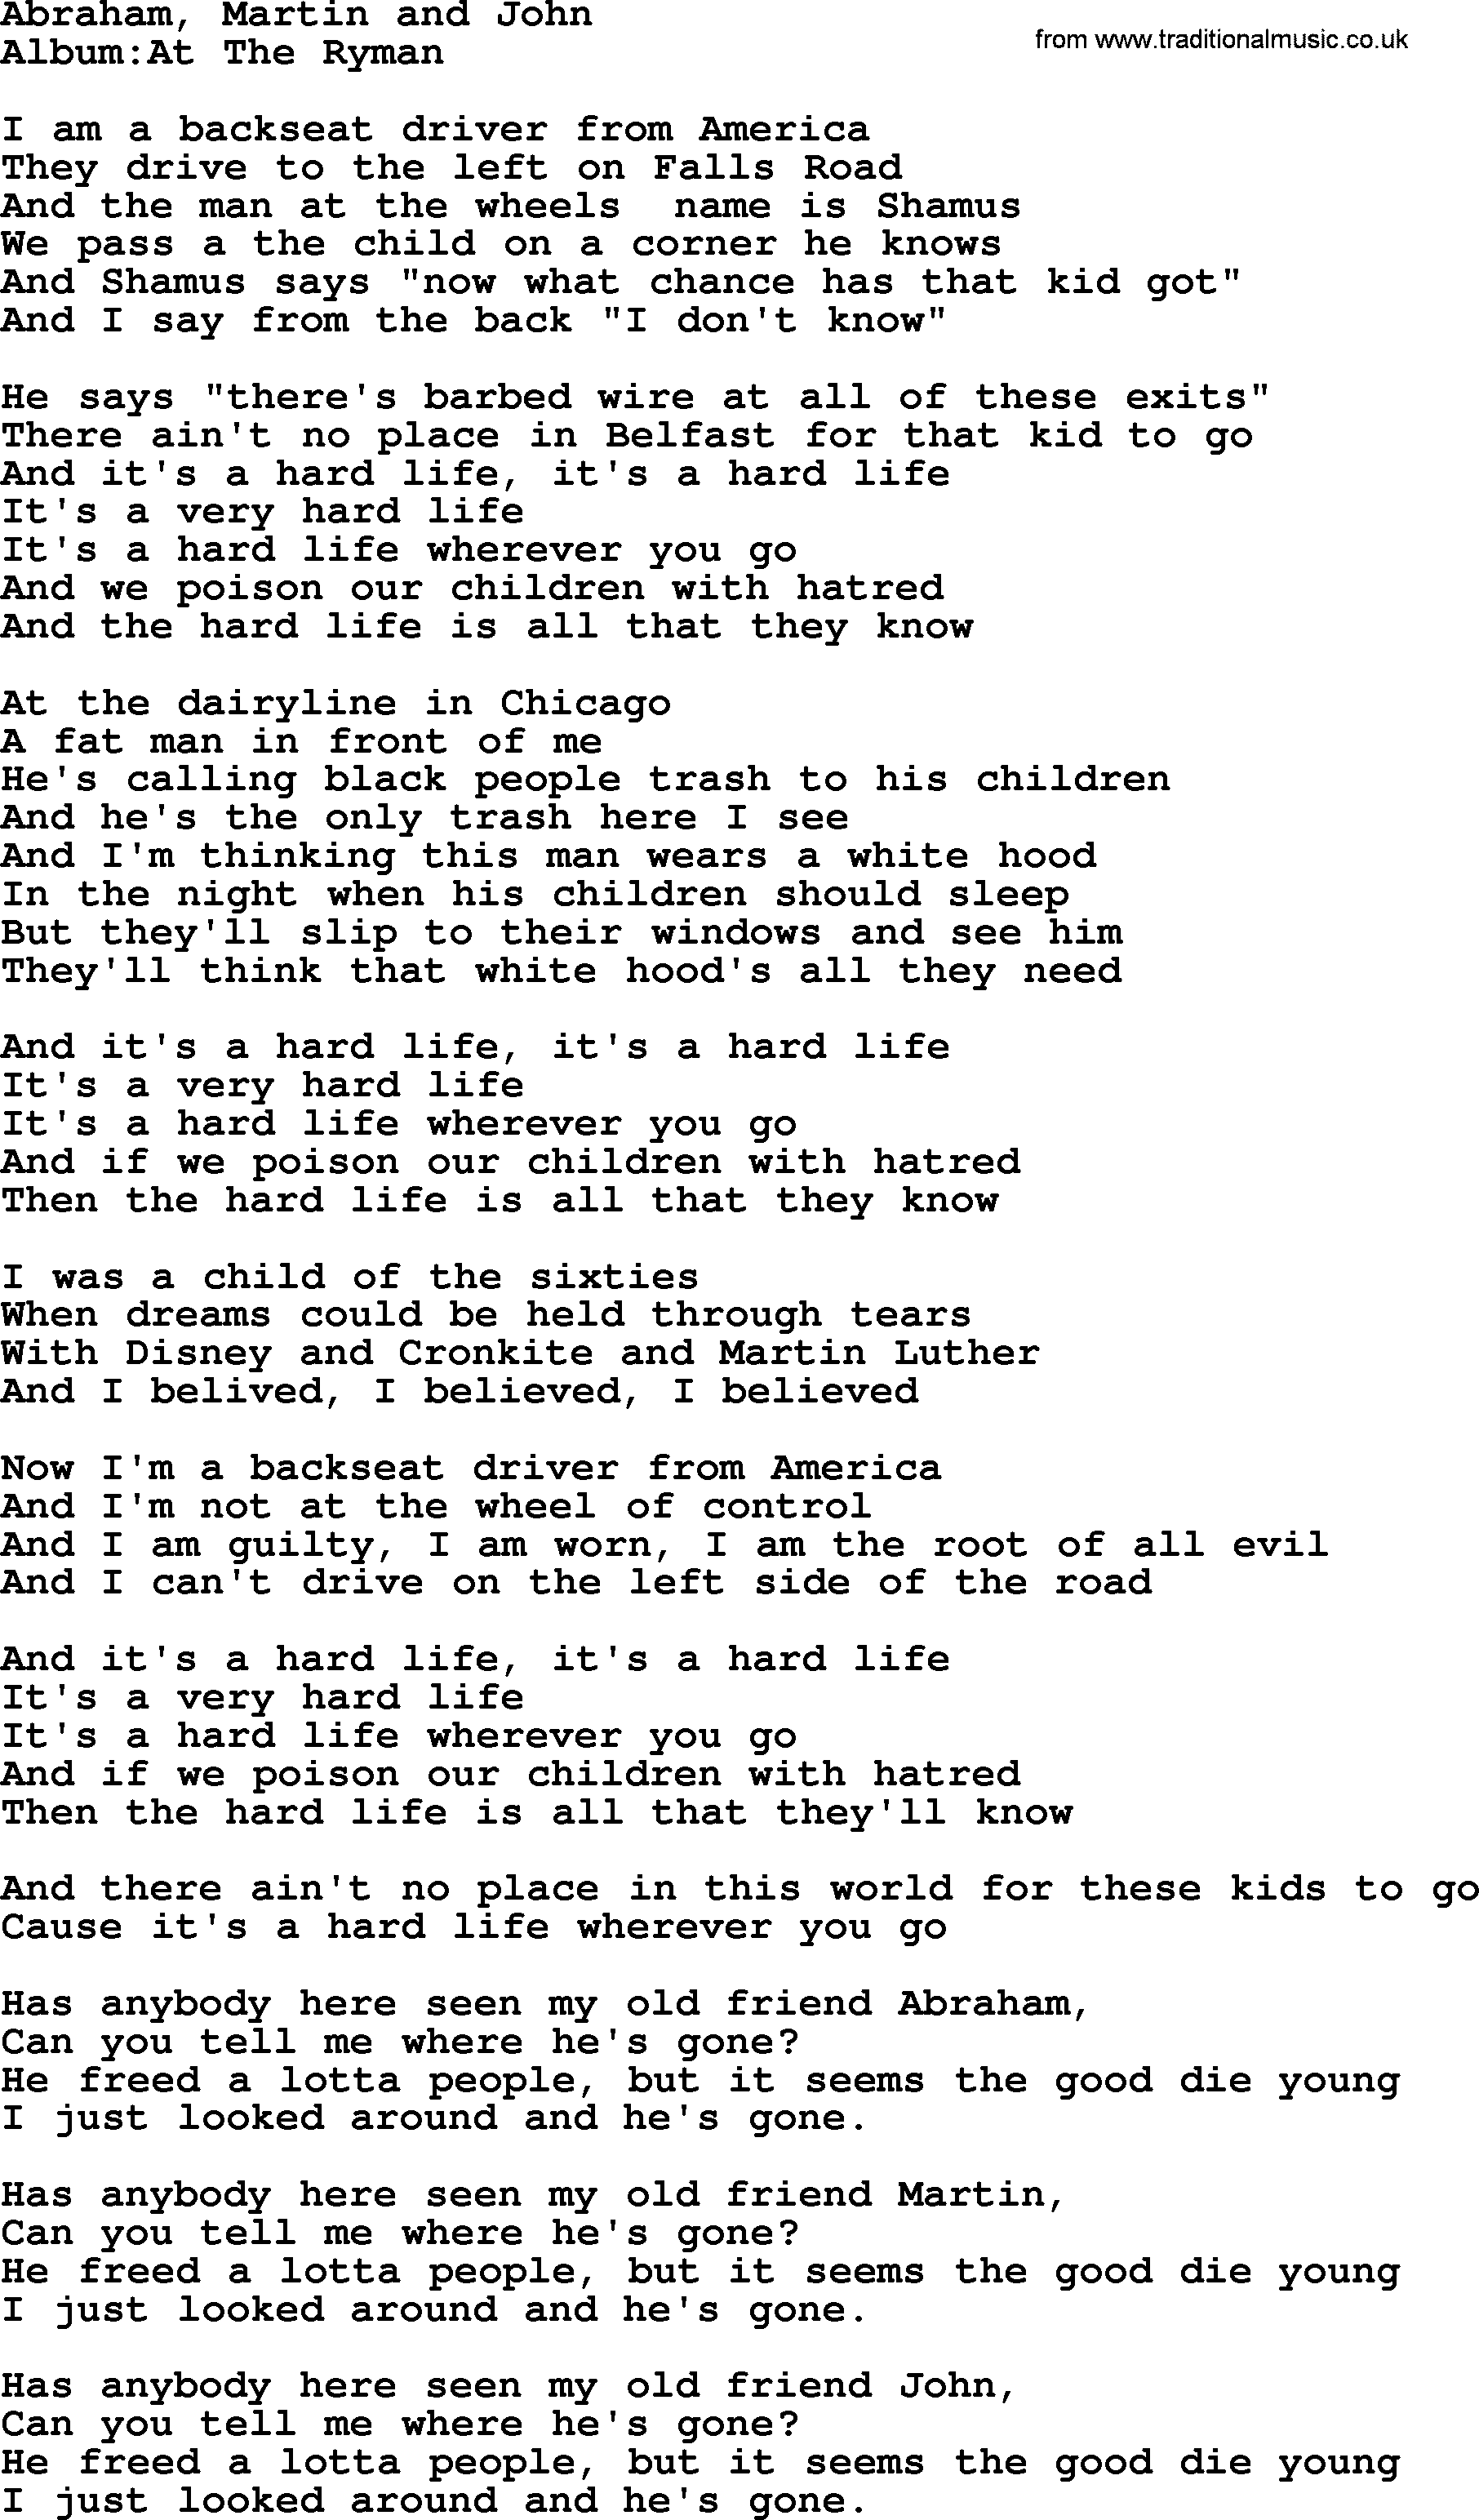 Emmylou Harris song: Abraham, Martin and John lyrics